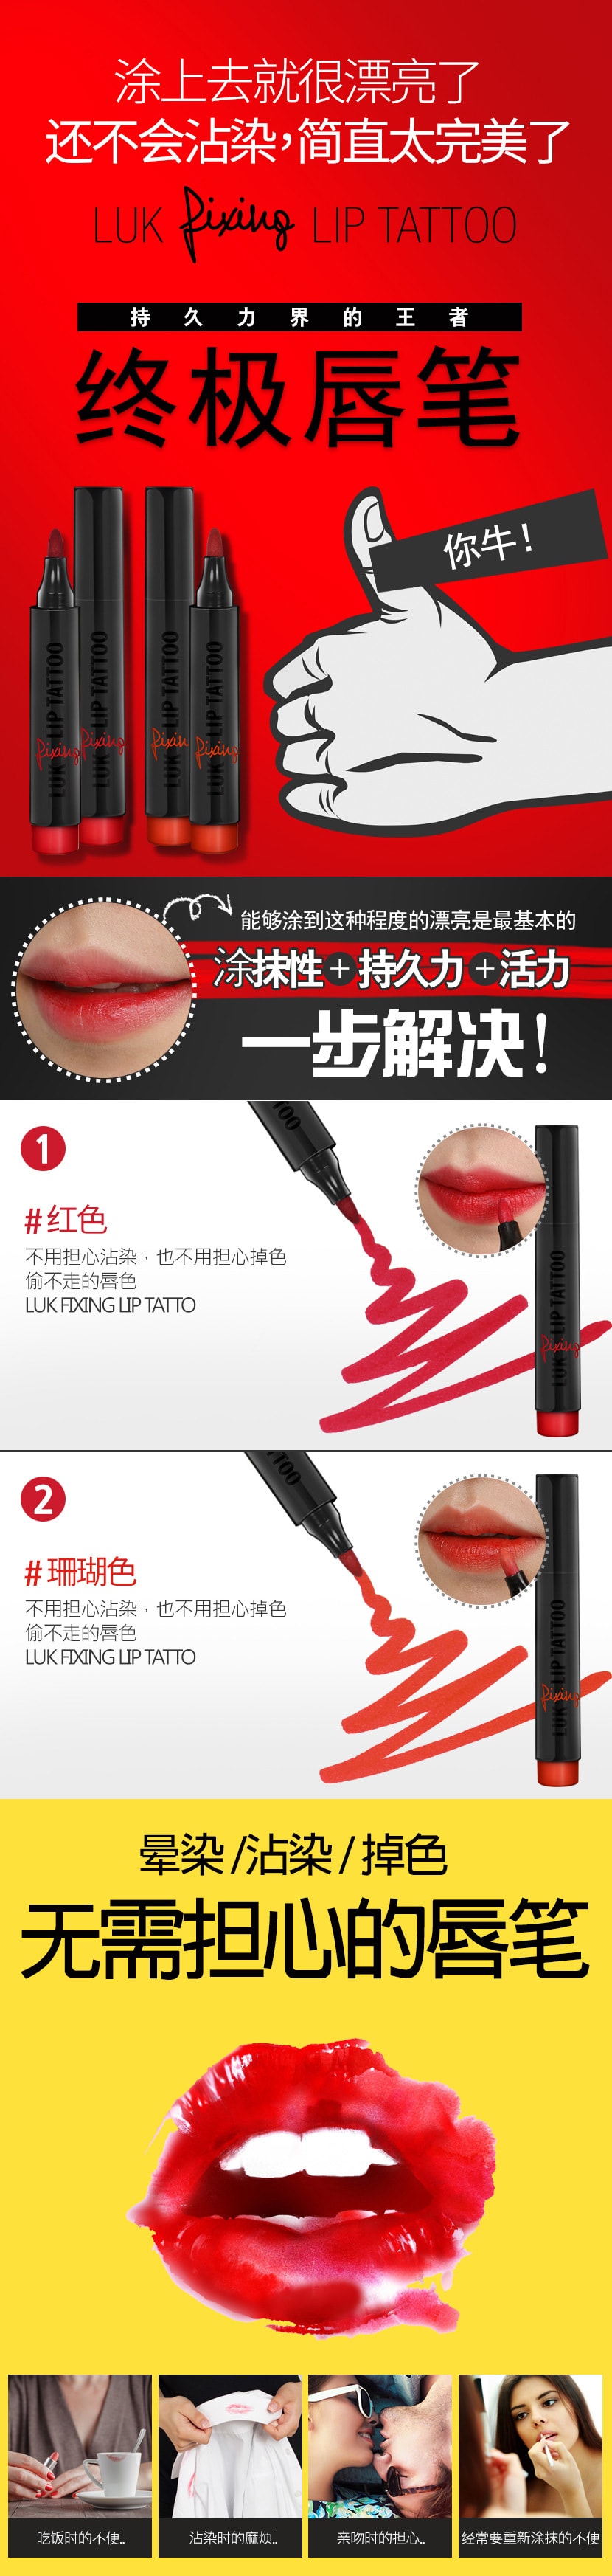 韩国 LUK Fixing Lip Tattoo 纹唇笔 #珊瑚色